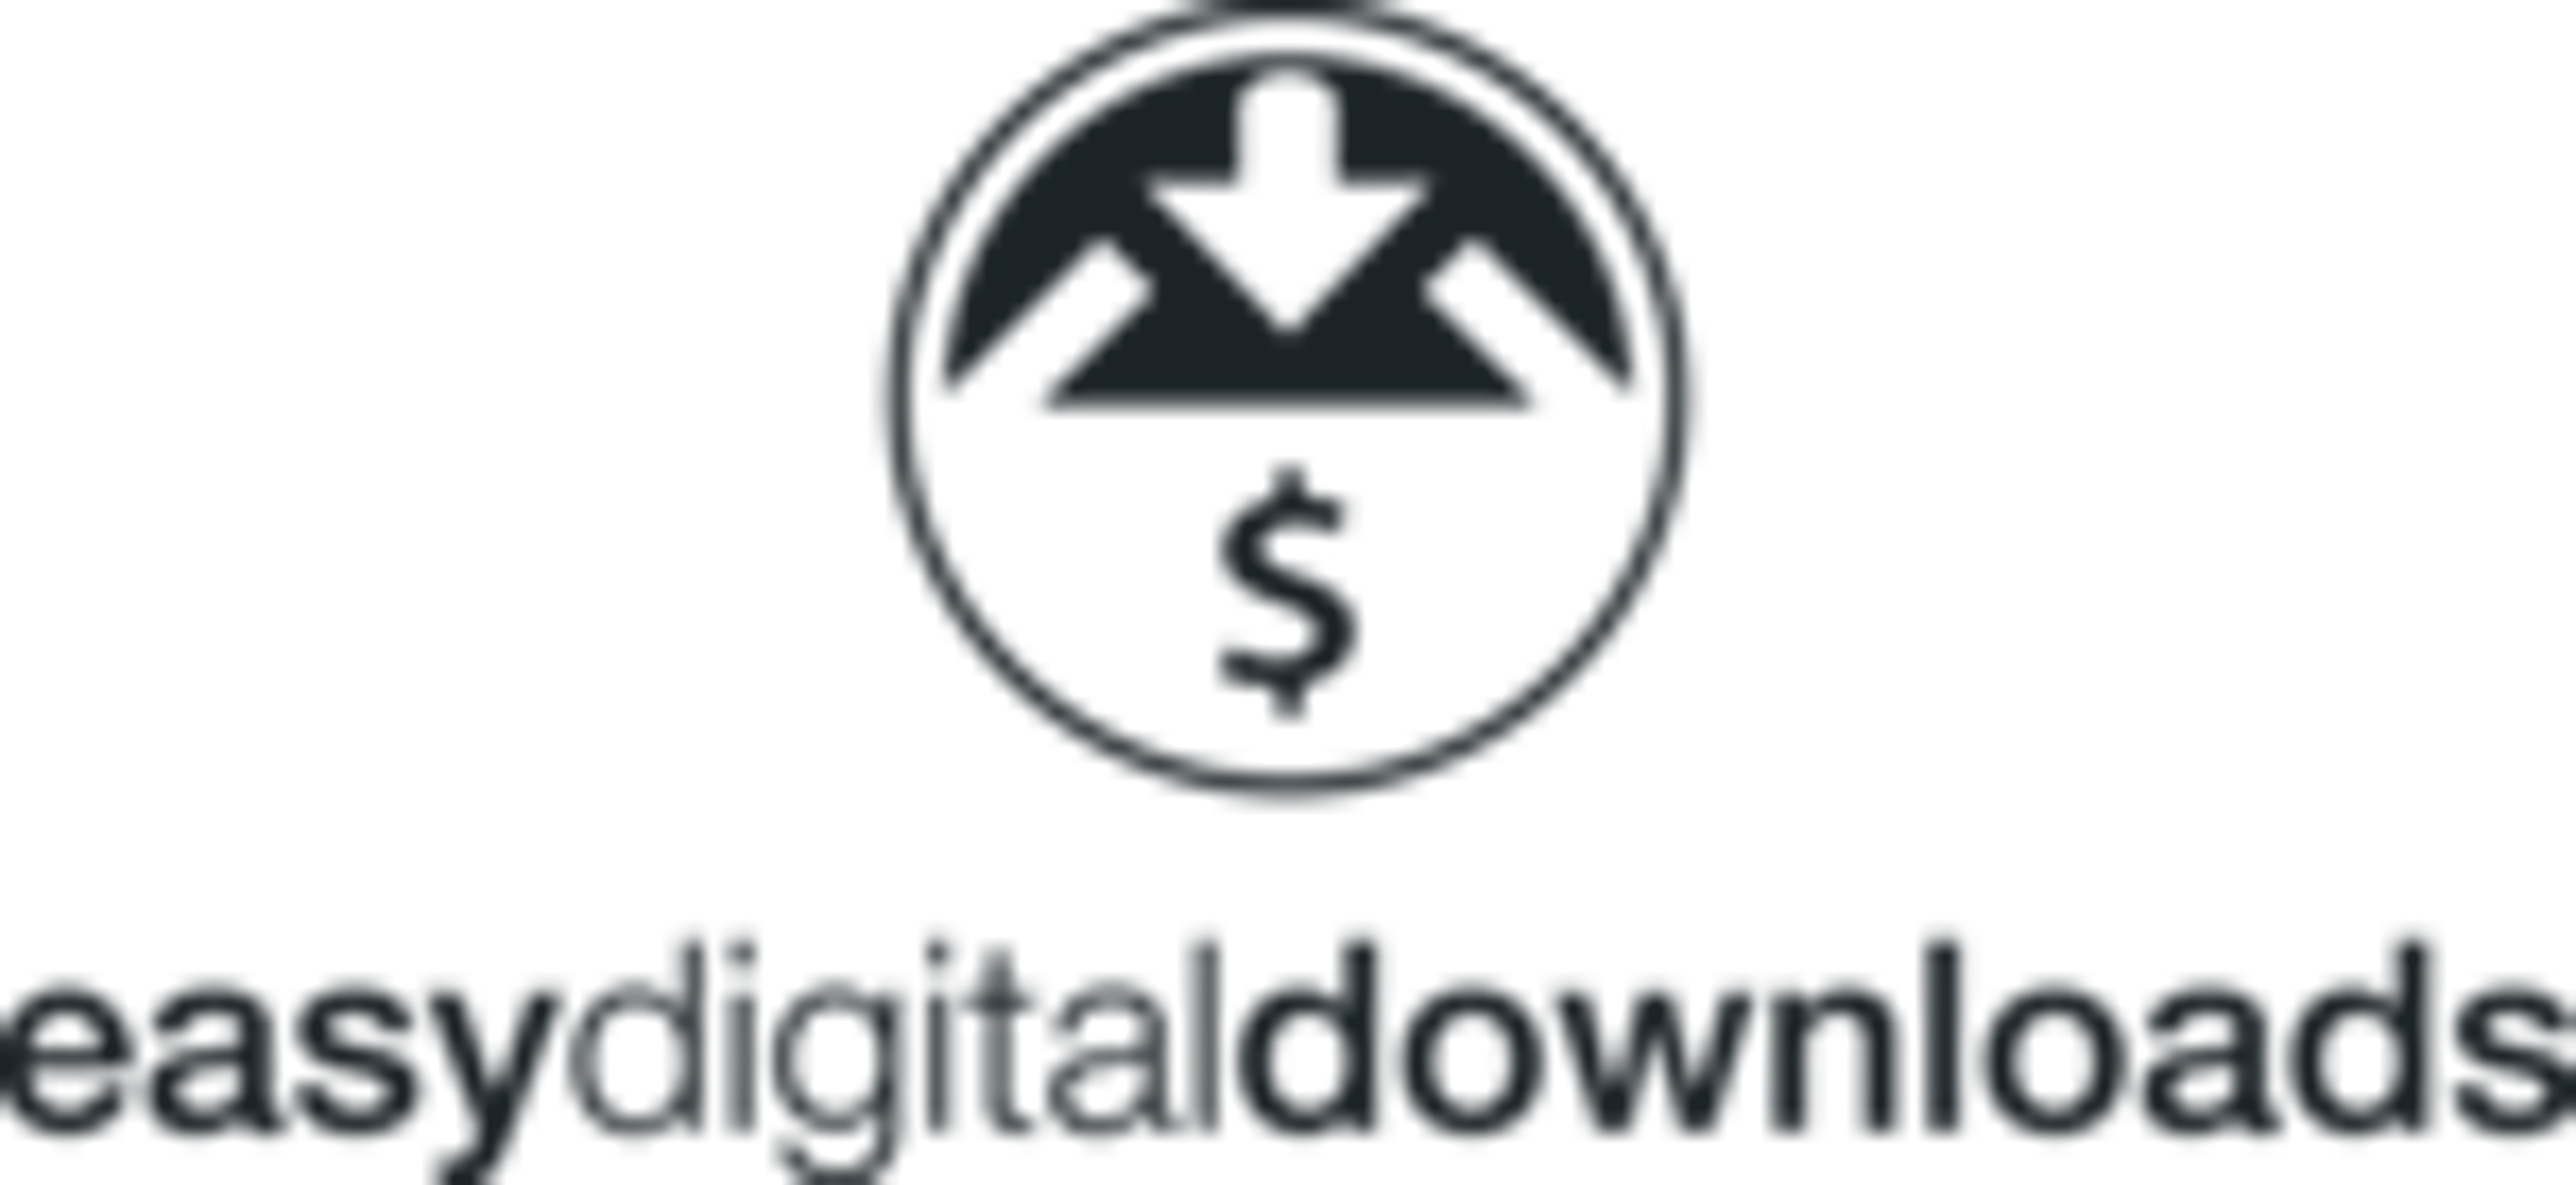 Easy Digital Downloads Logo